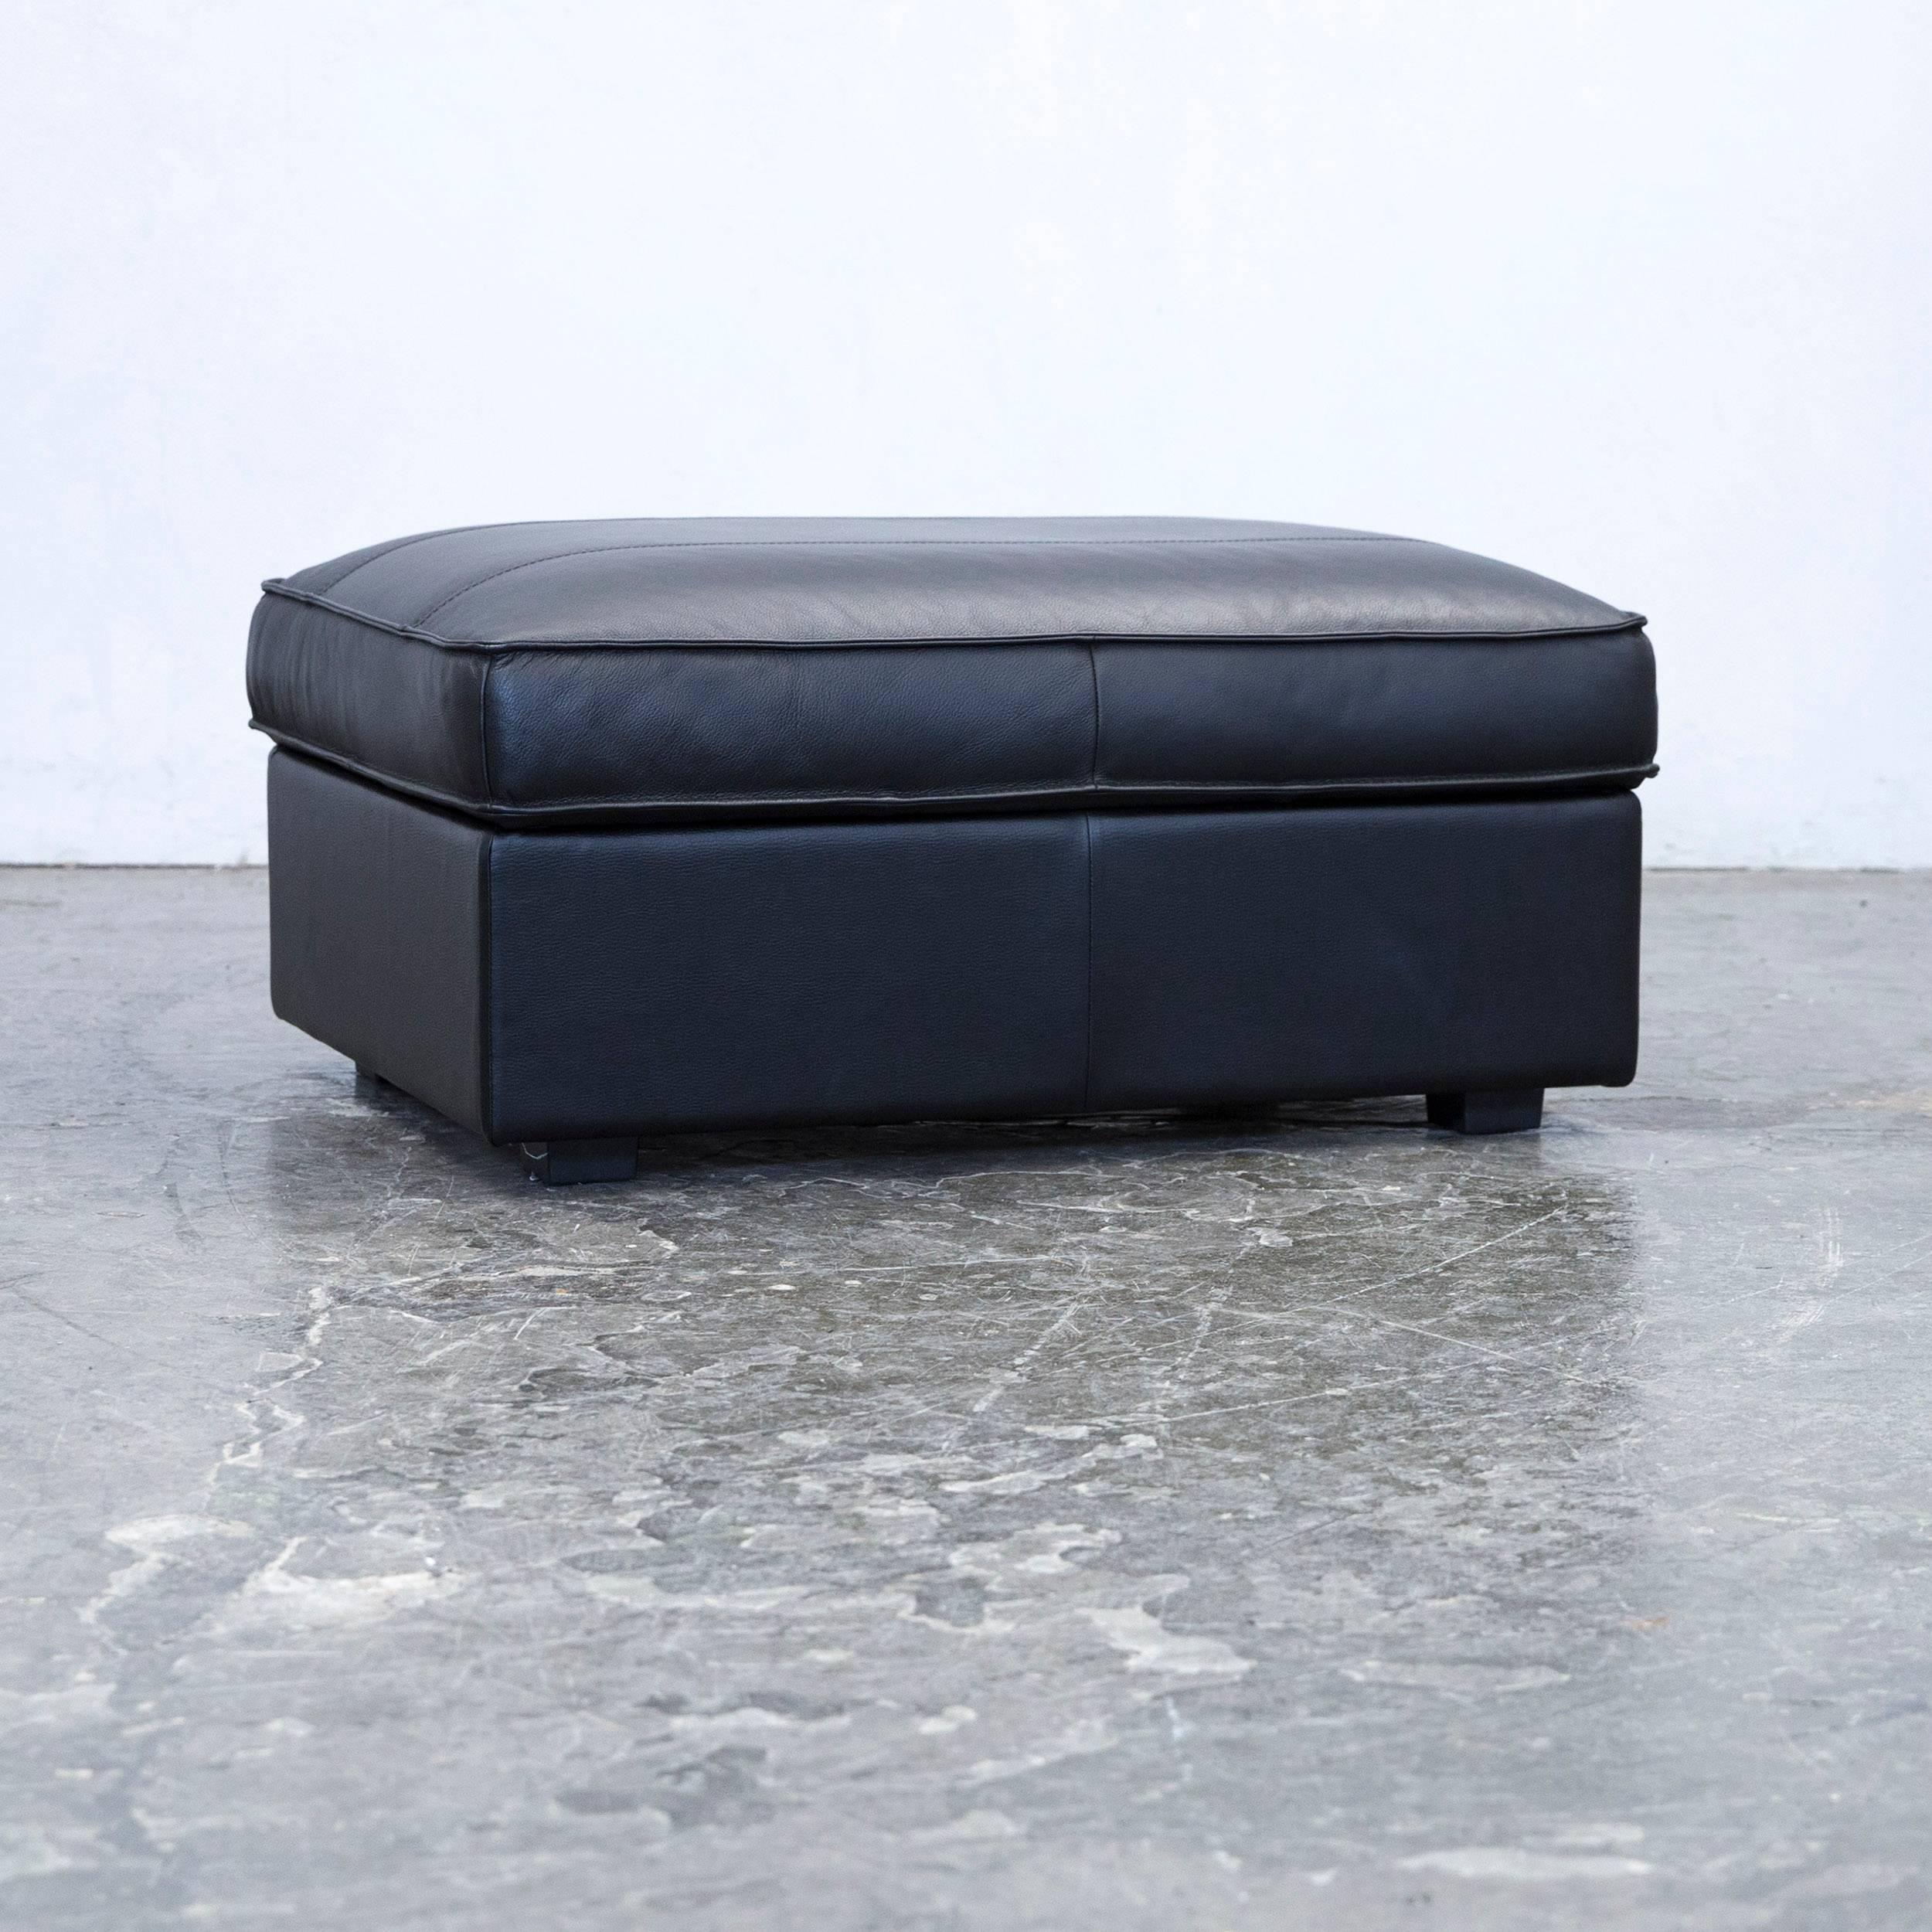 Designer Sleepsofa Set Leather Black Function Couch Topper Modern Footstool 4